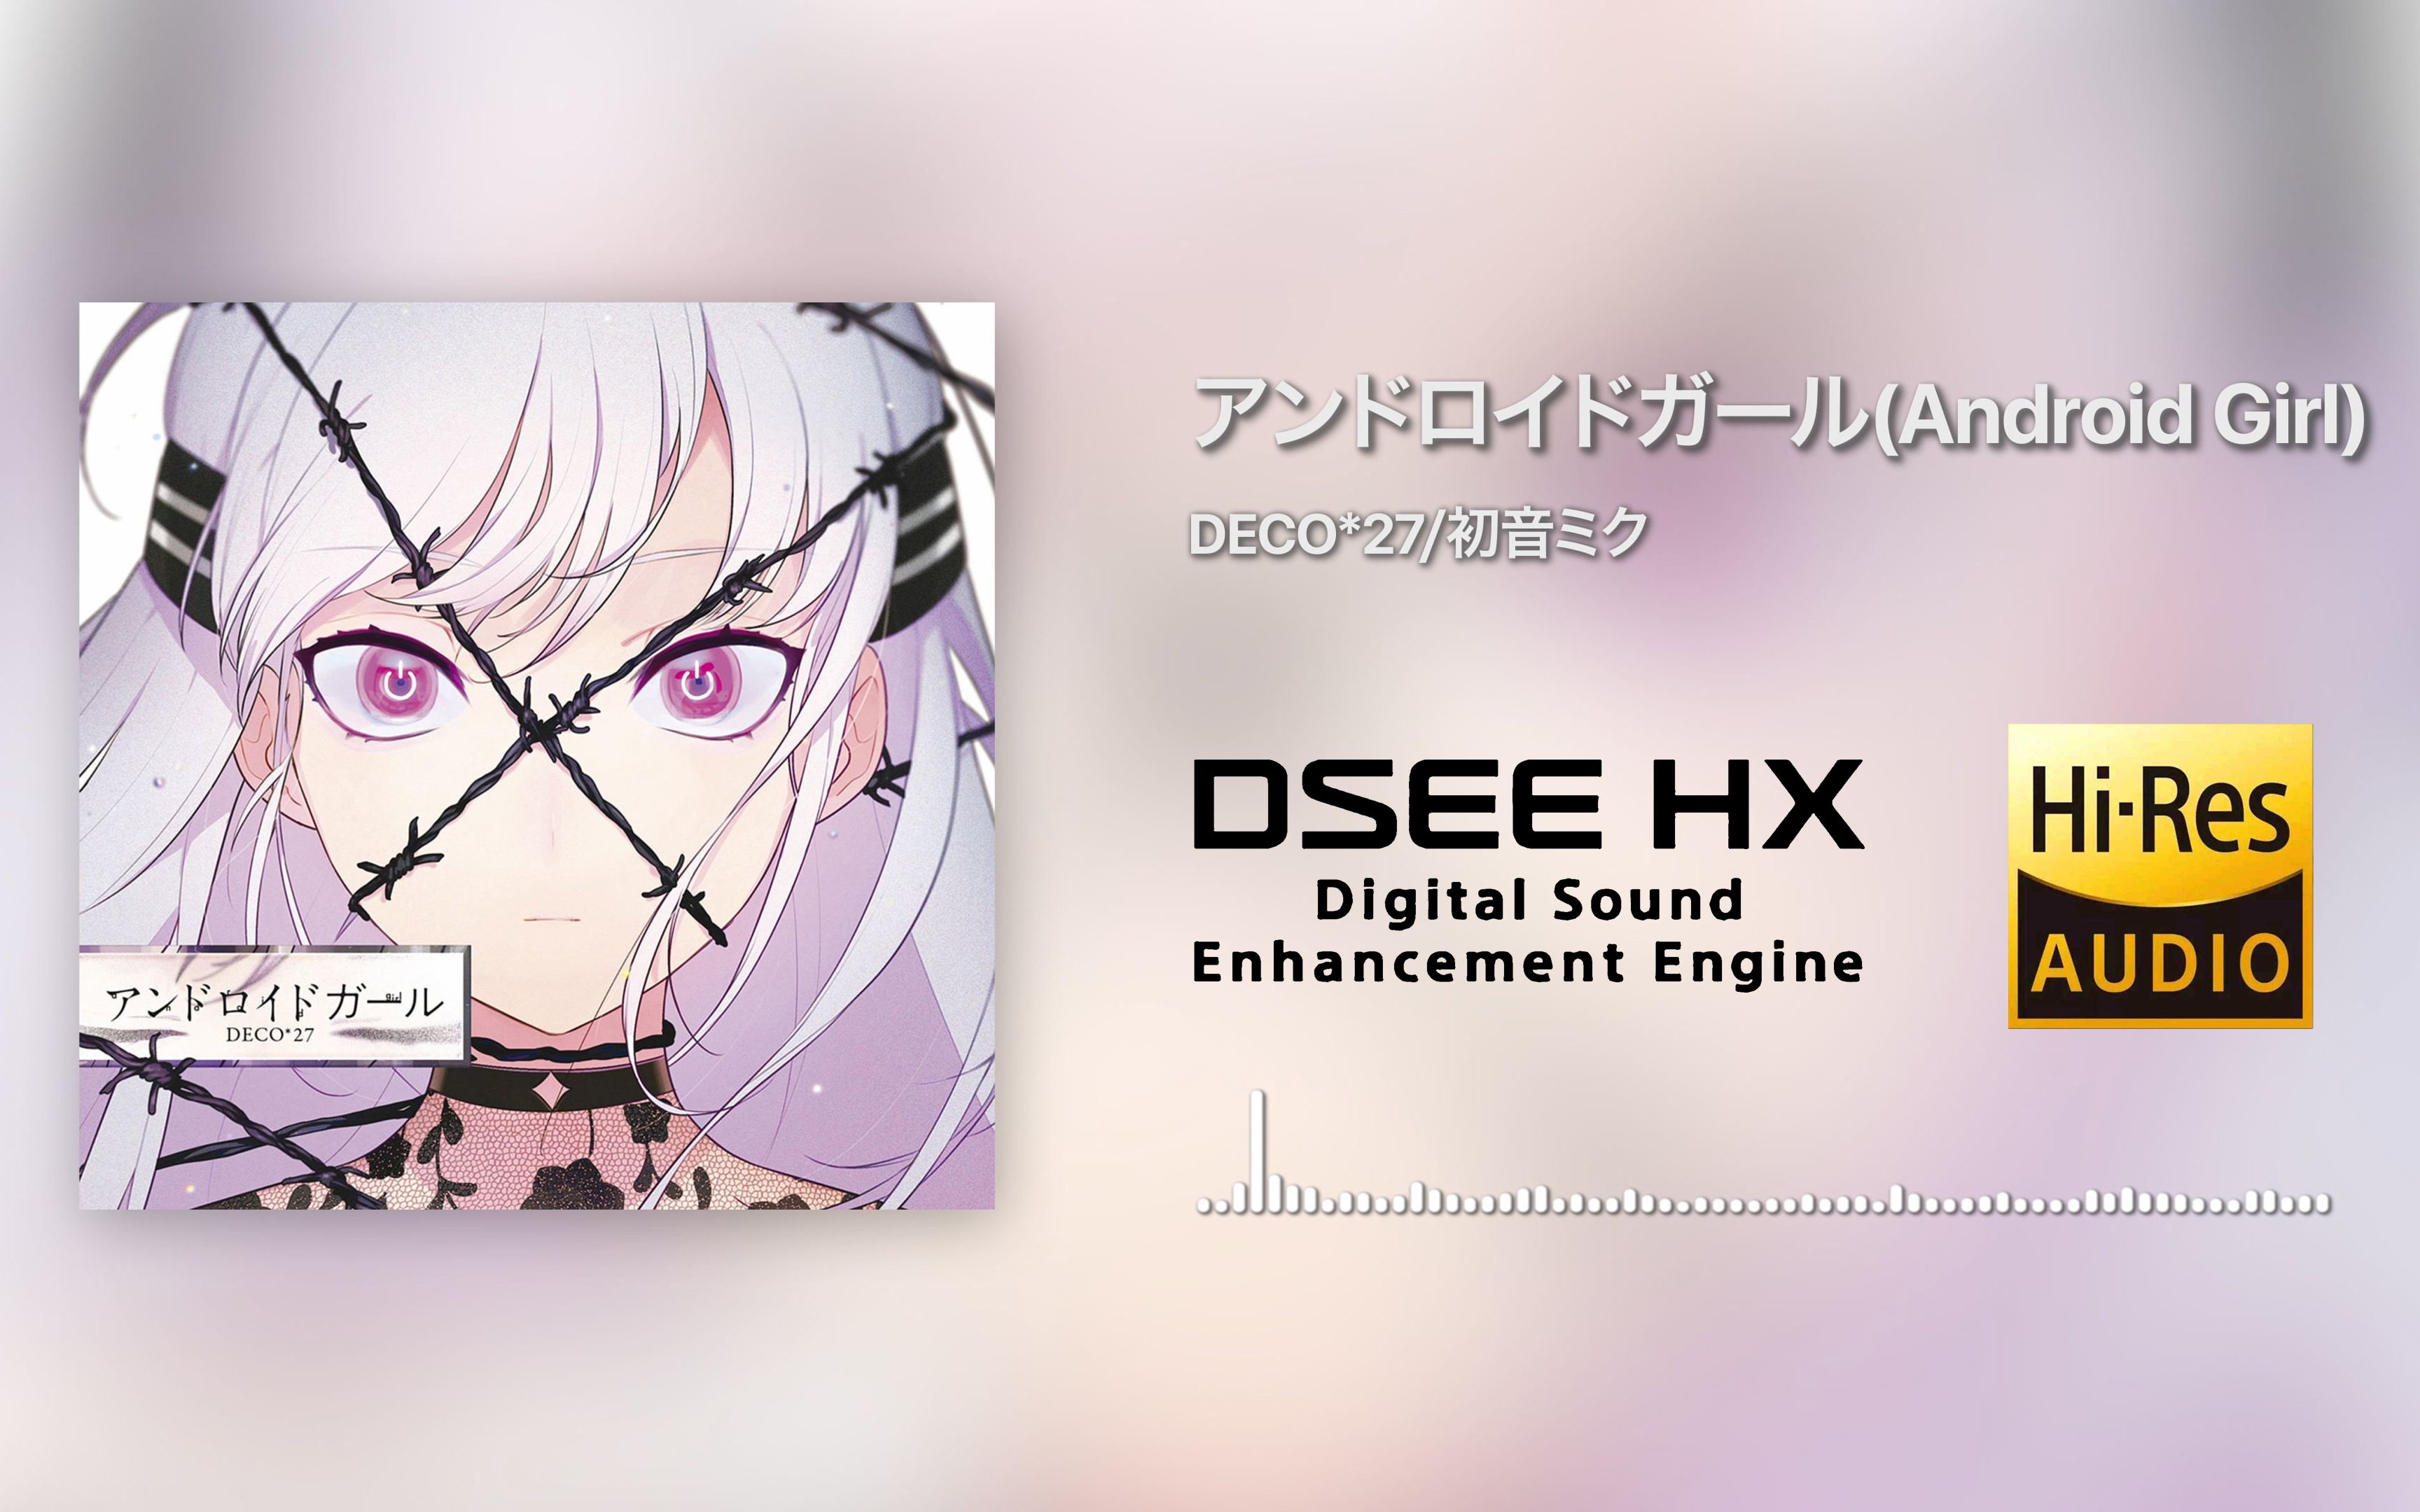 [4K Hi-Res×DSEE HX] Reunion&アンドロイドガール(Android Girl) - DECO*27/初音ミク [24bit/96kHz]